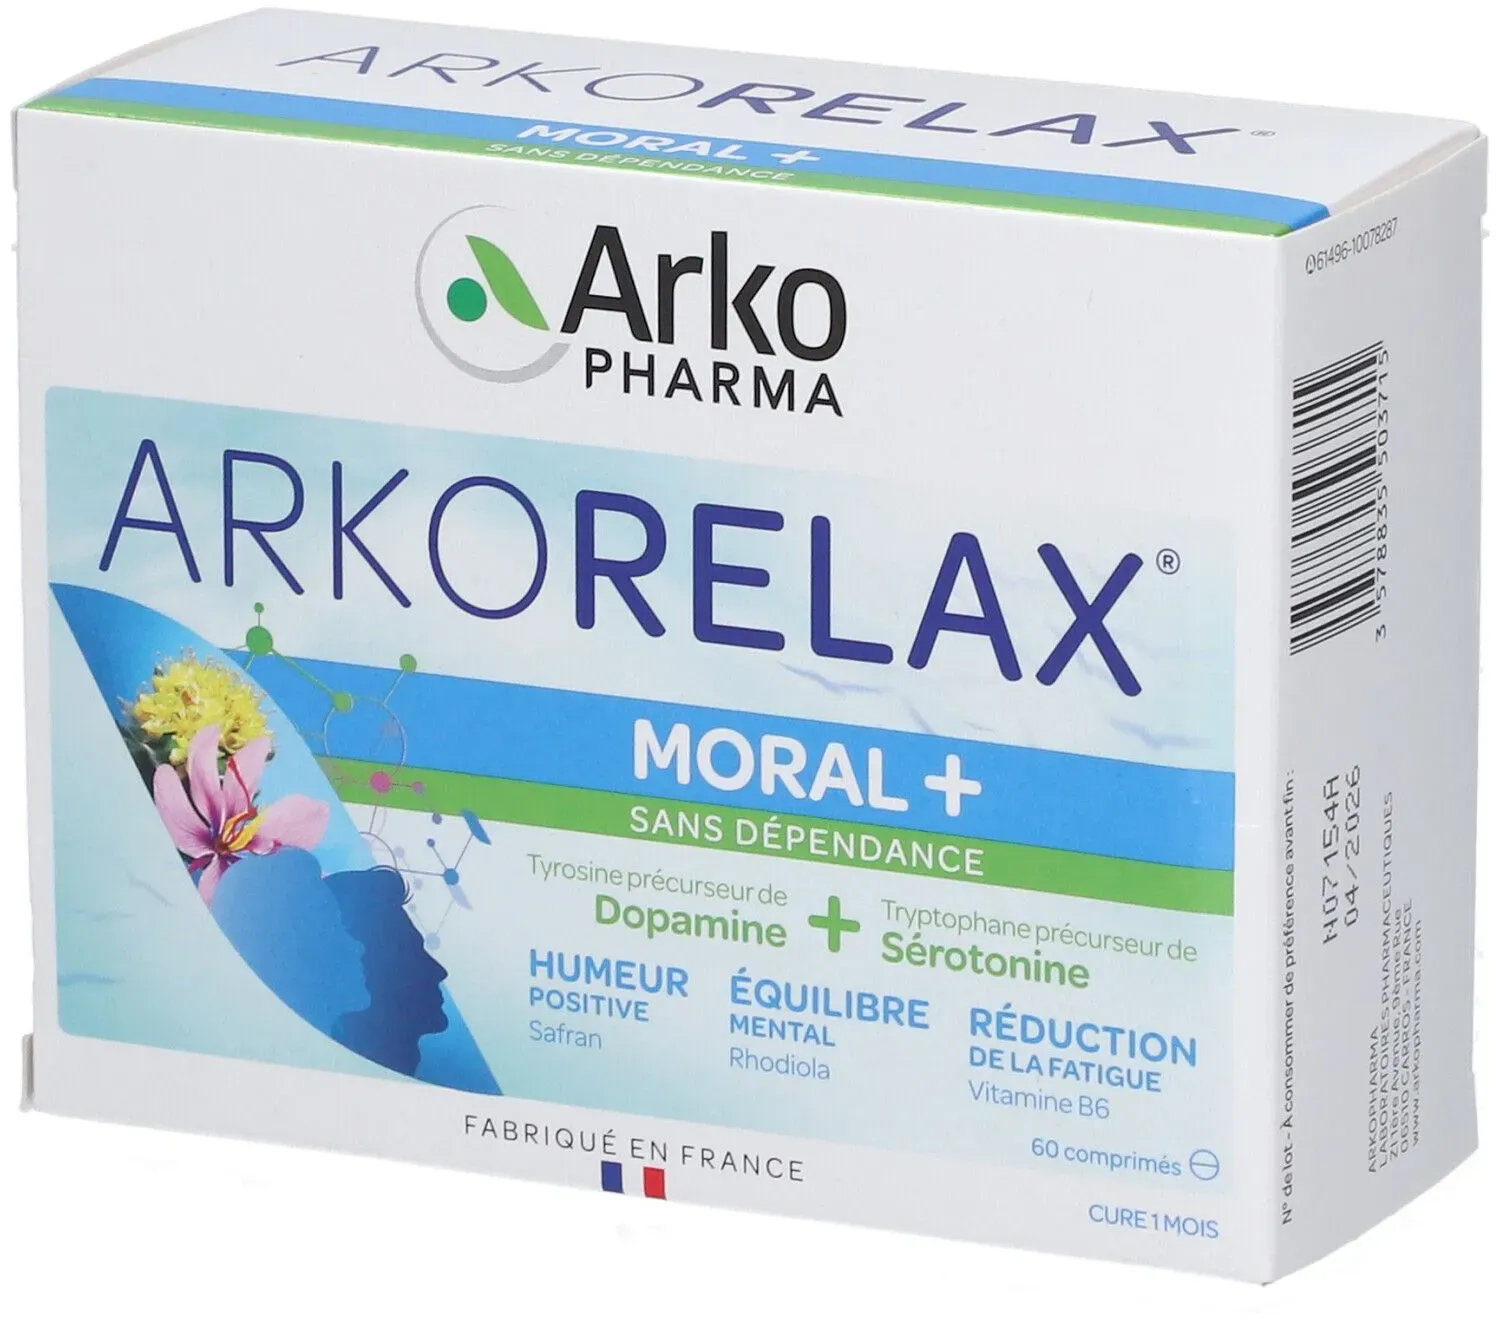 Arkopharma Arkorelax® Moral + 60 comprimé(s)